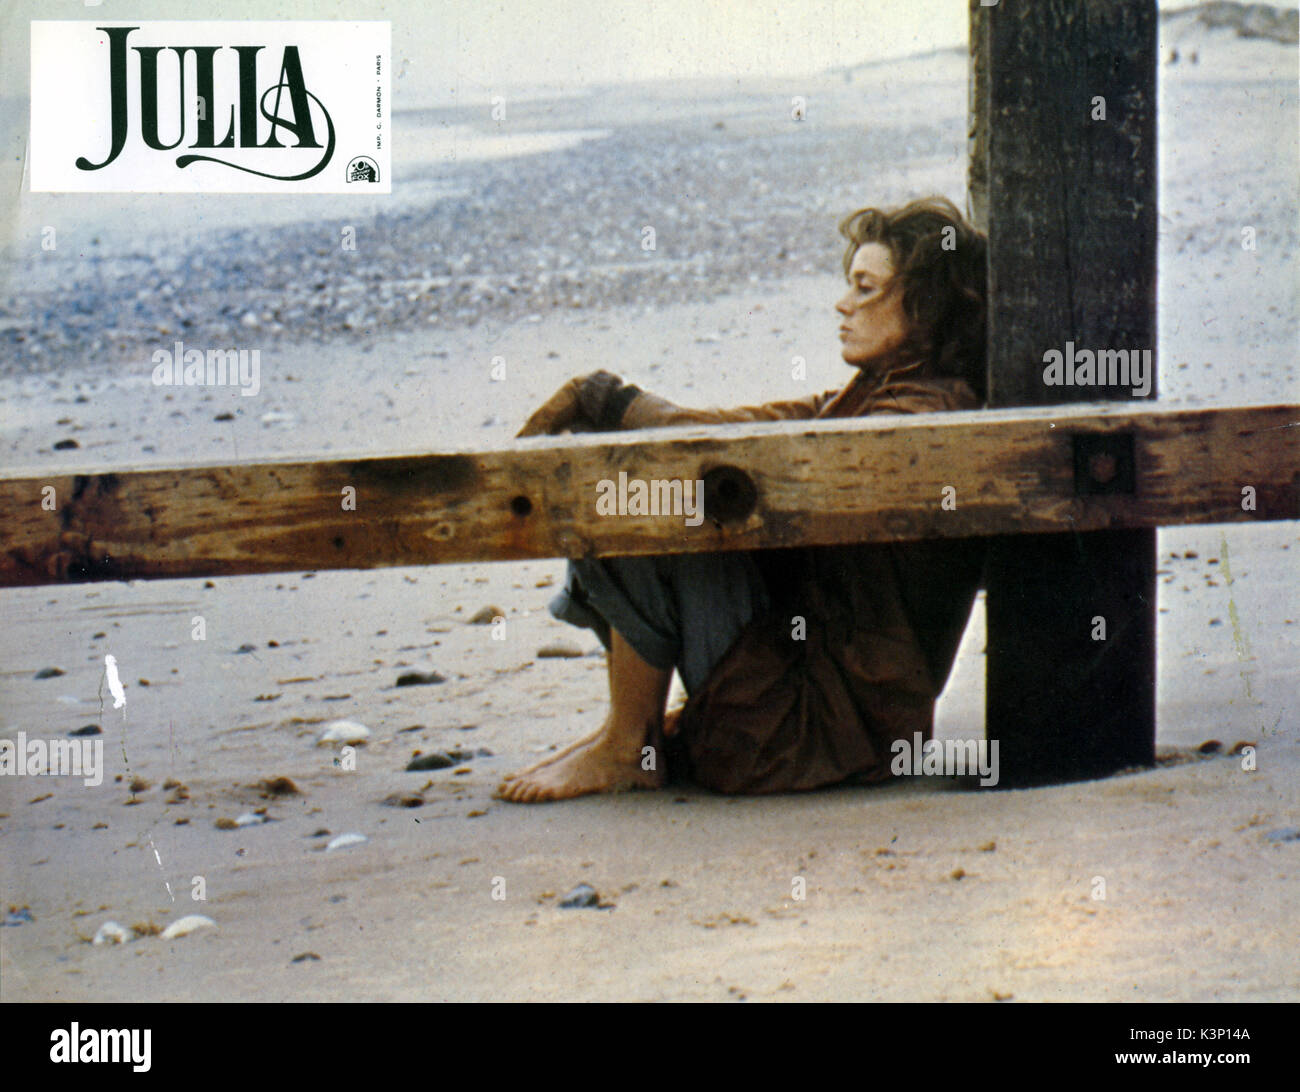 JULIA [US 1977] JANE FONDA as Lillian Hellmann     Date: 1977 Stock Photo